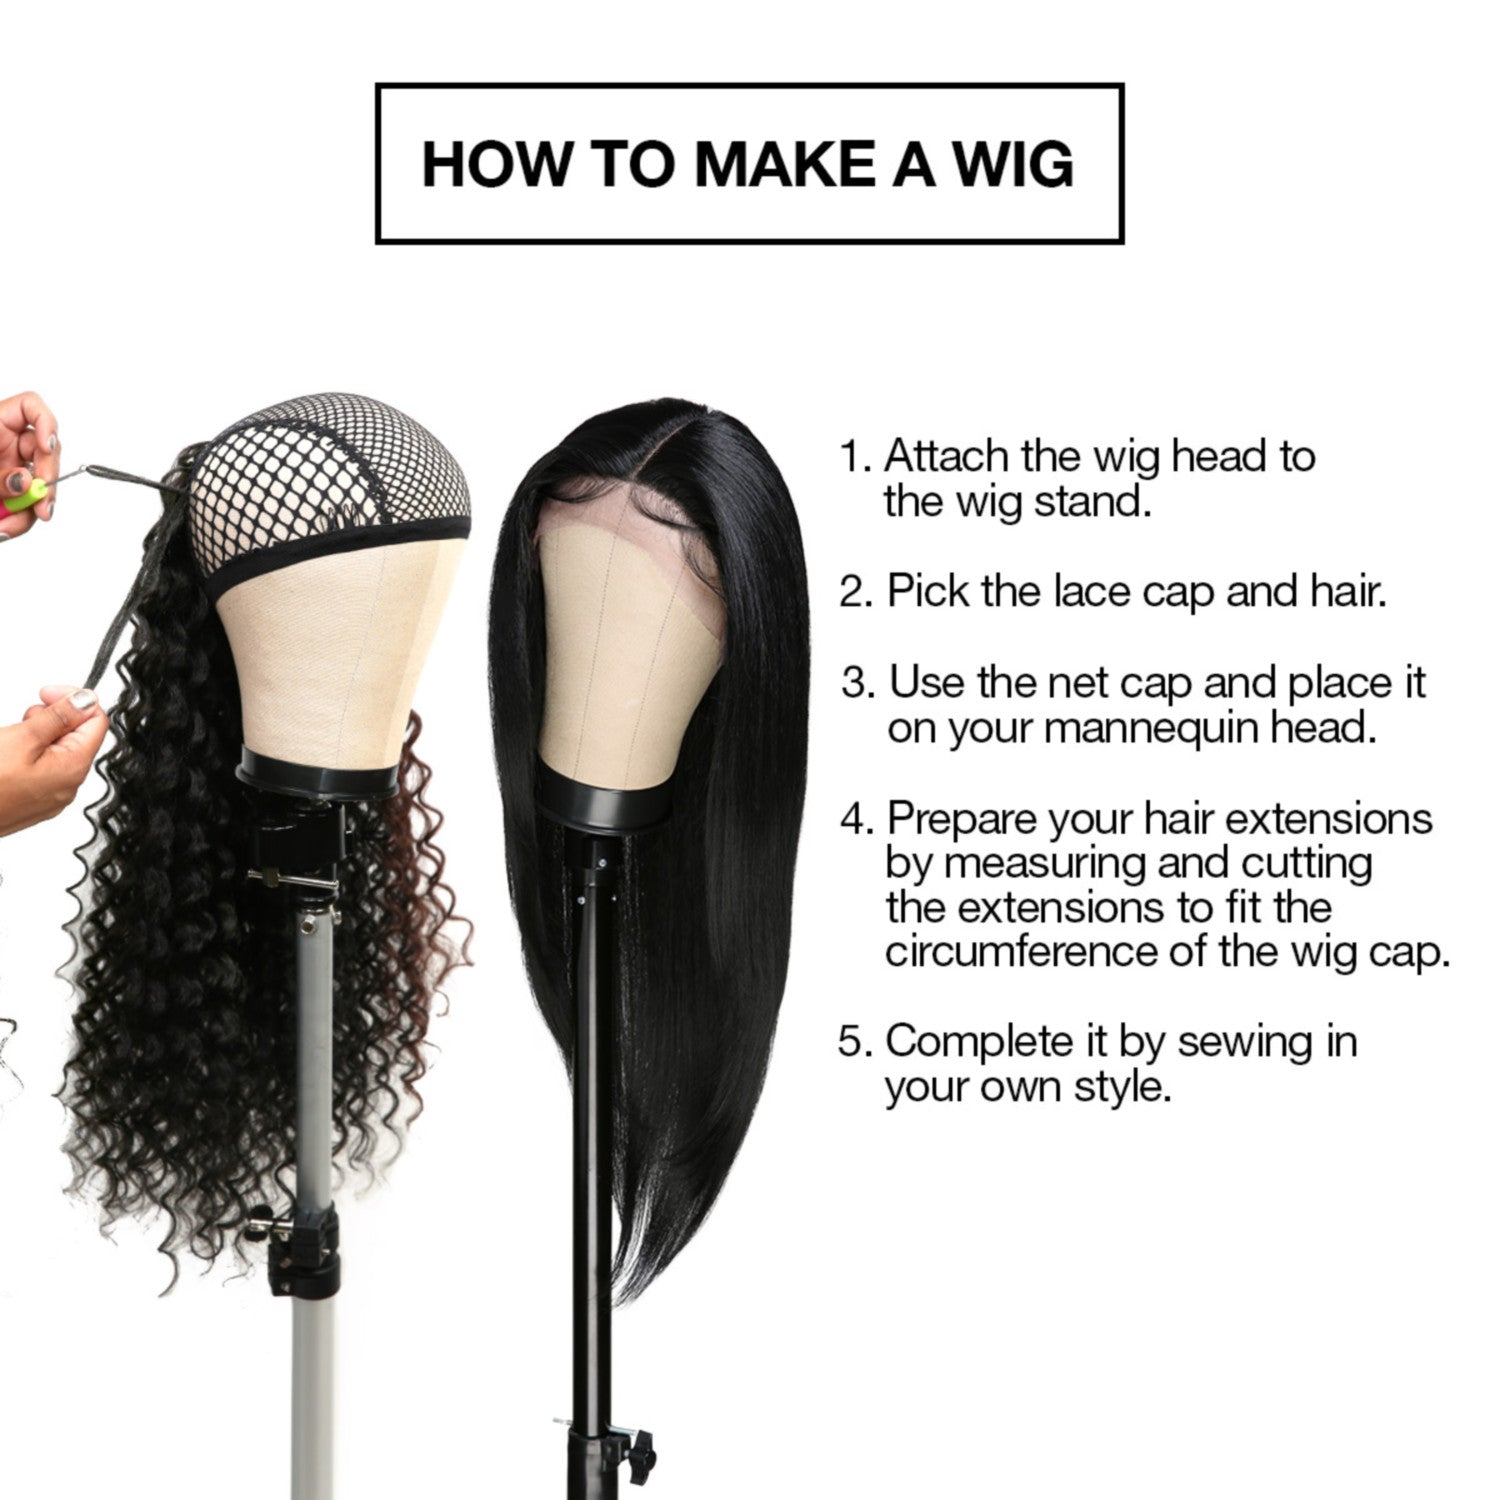 Studio Limited Canvas Block Head, Height 12", DIY Wig Making Starter Kit 12pcs